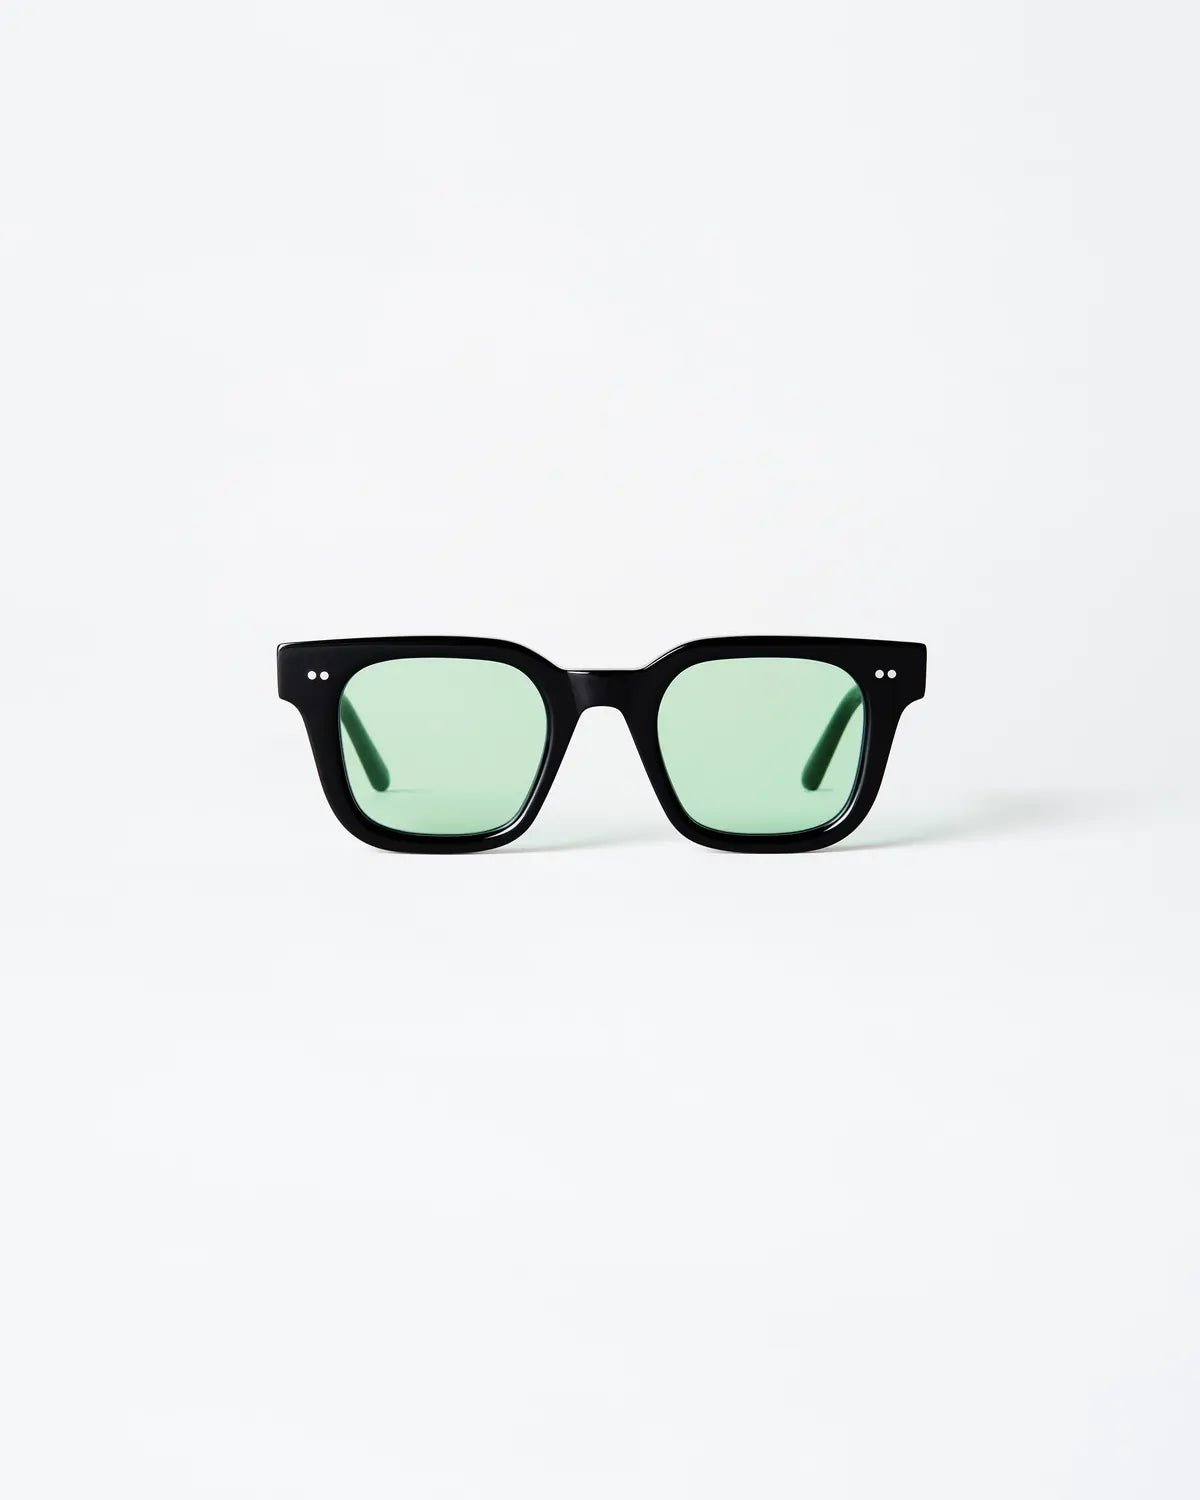 Chimi Eyewear 04 Lab Black Teal Green